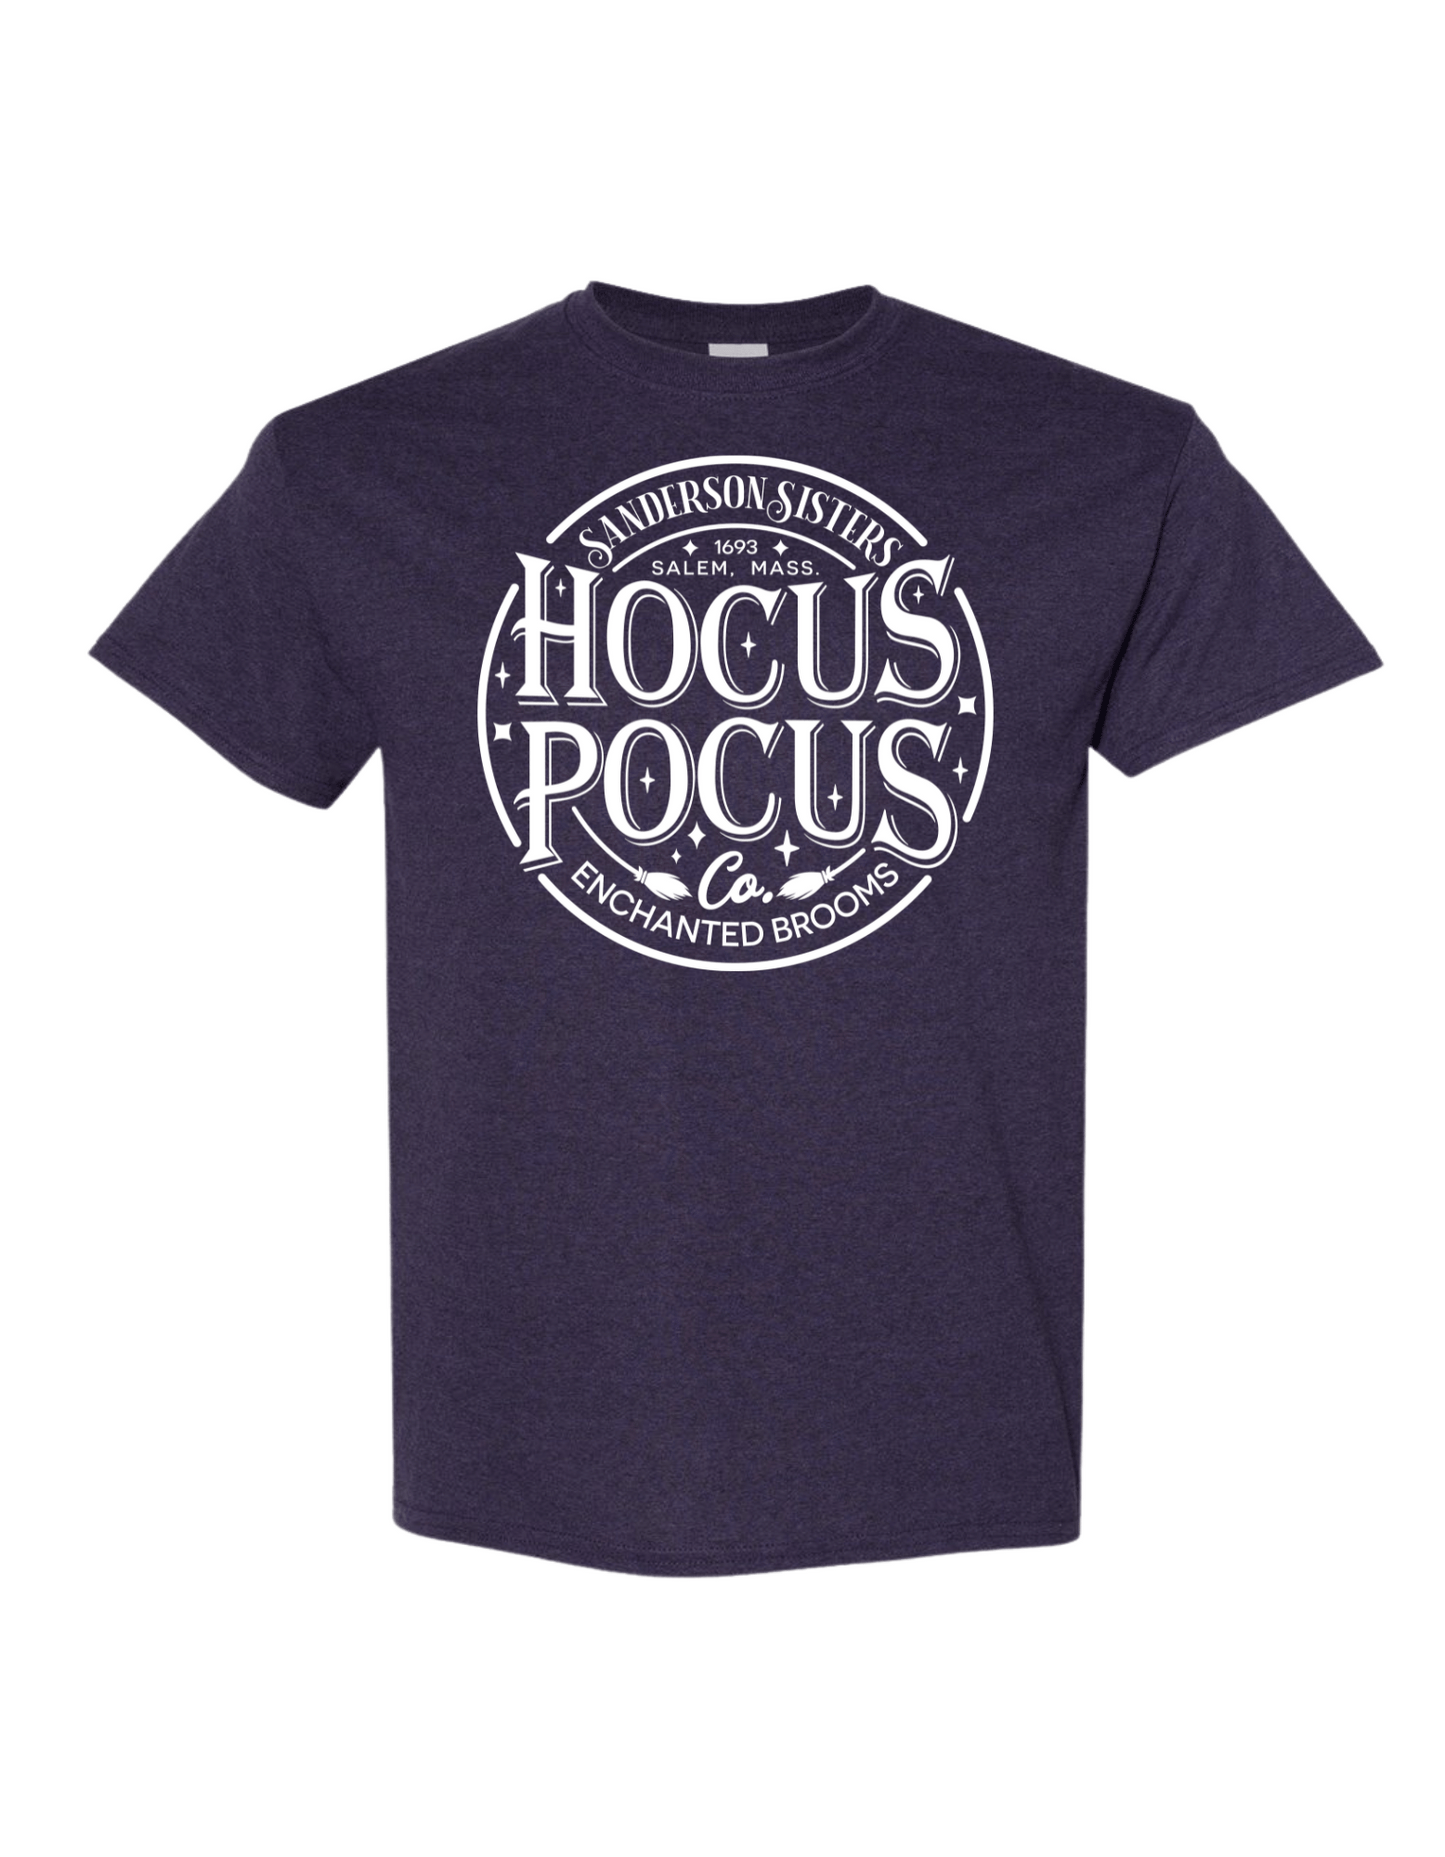 Made to Order Handmade Hocus Pocus Halloween Short Sleeve Shirt